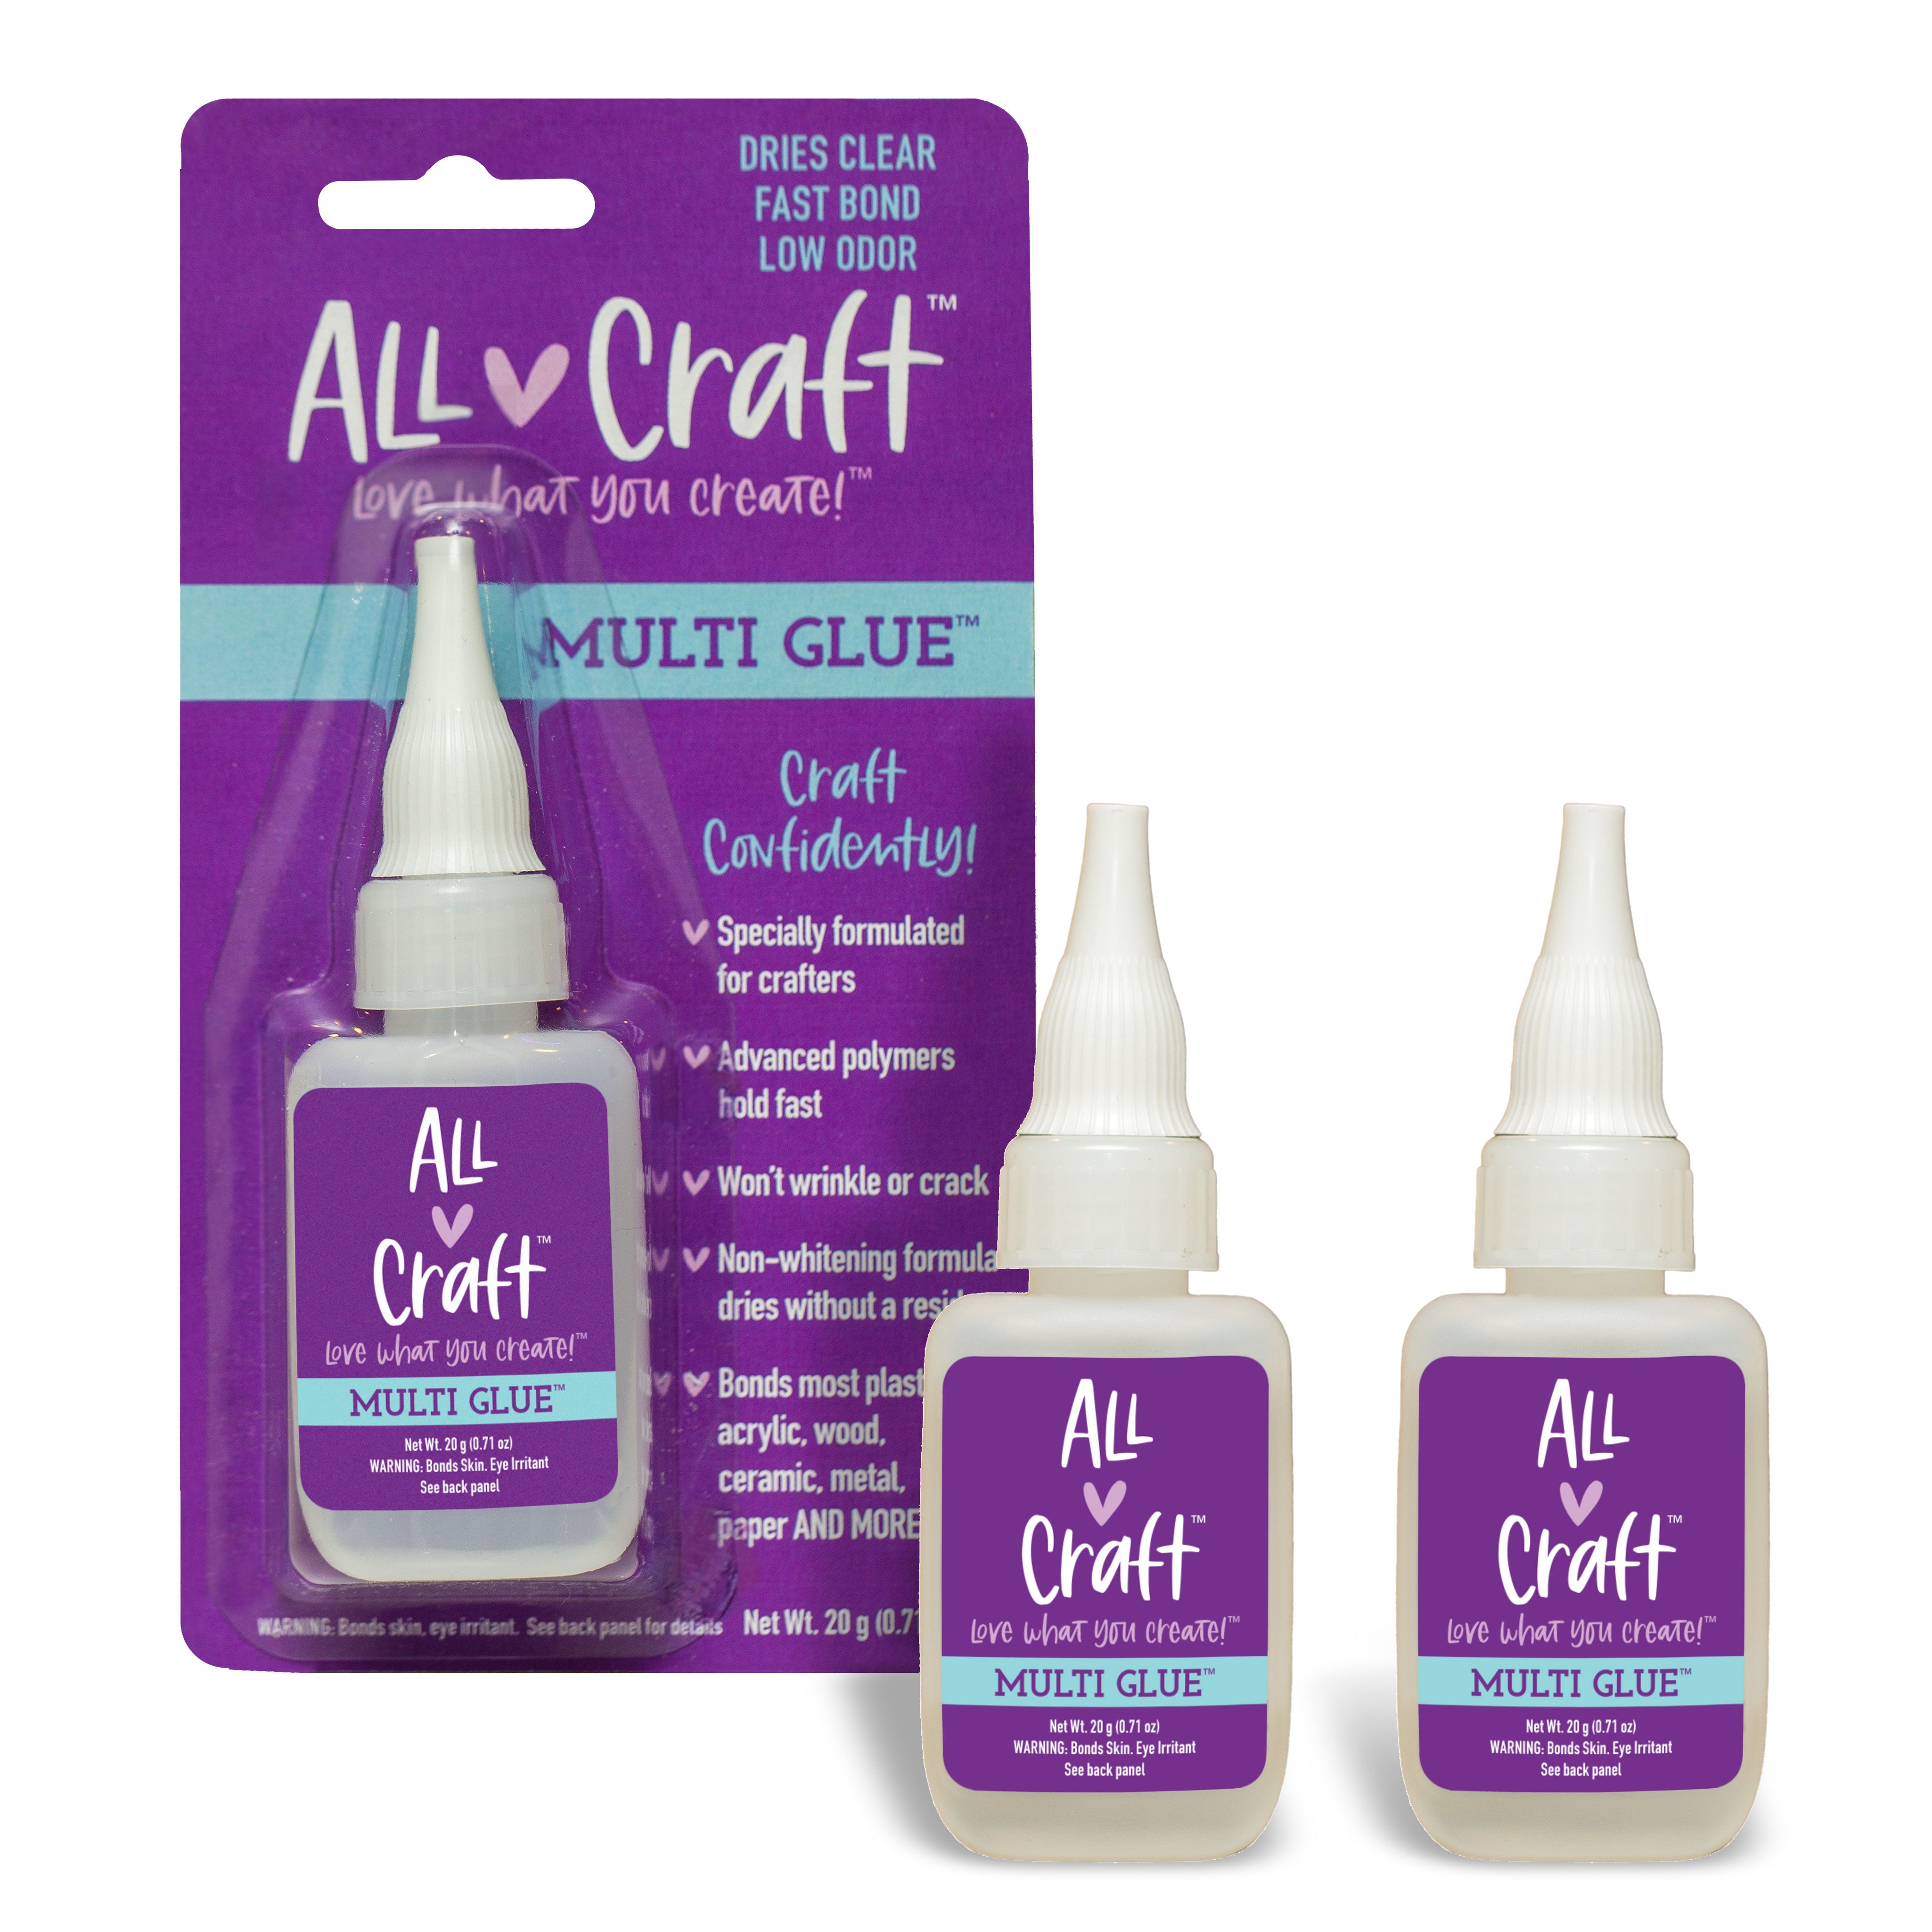 All-Craft Multi Glue - Premium craft glue for the professional maker